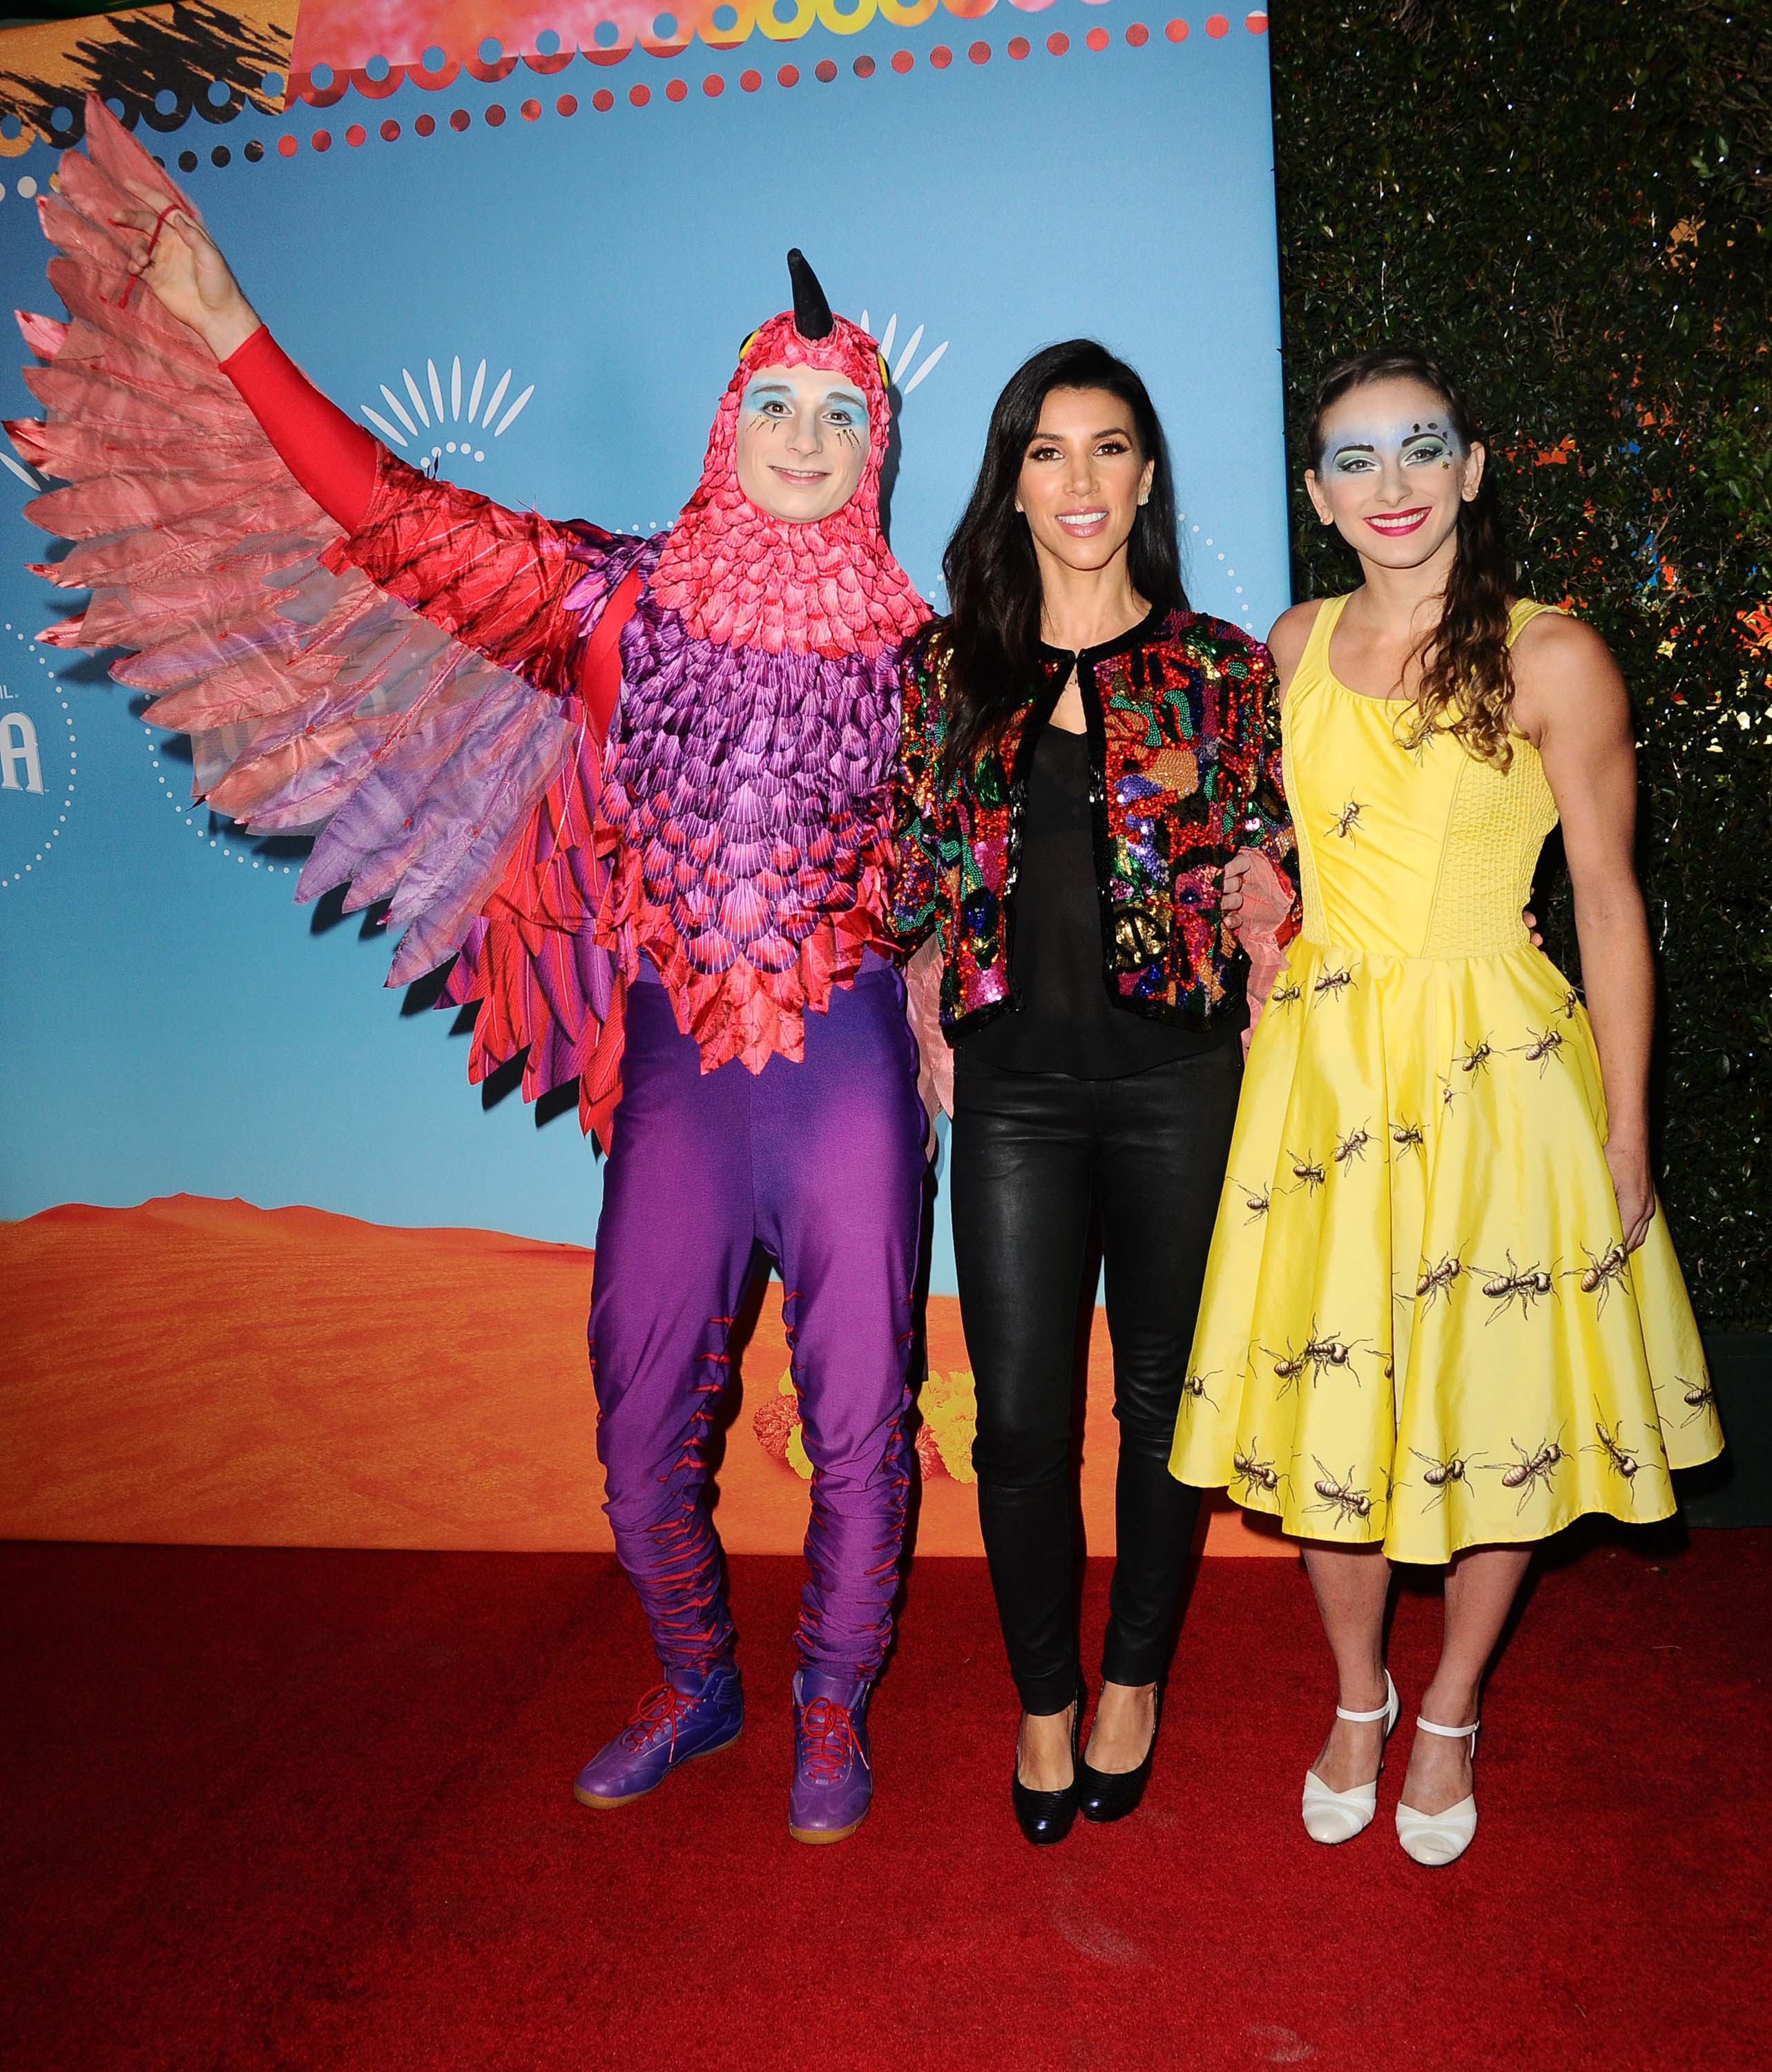 Adrianna Costa attends Premiere of Cirque du Soleil’s production LUZIA